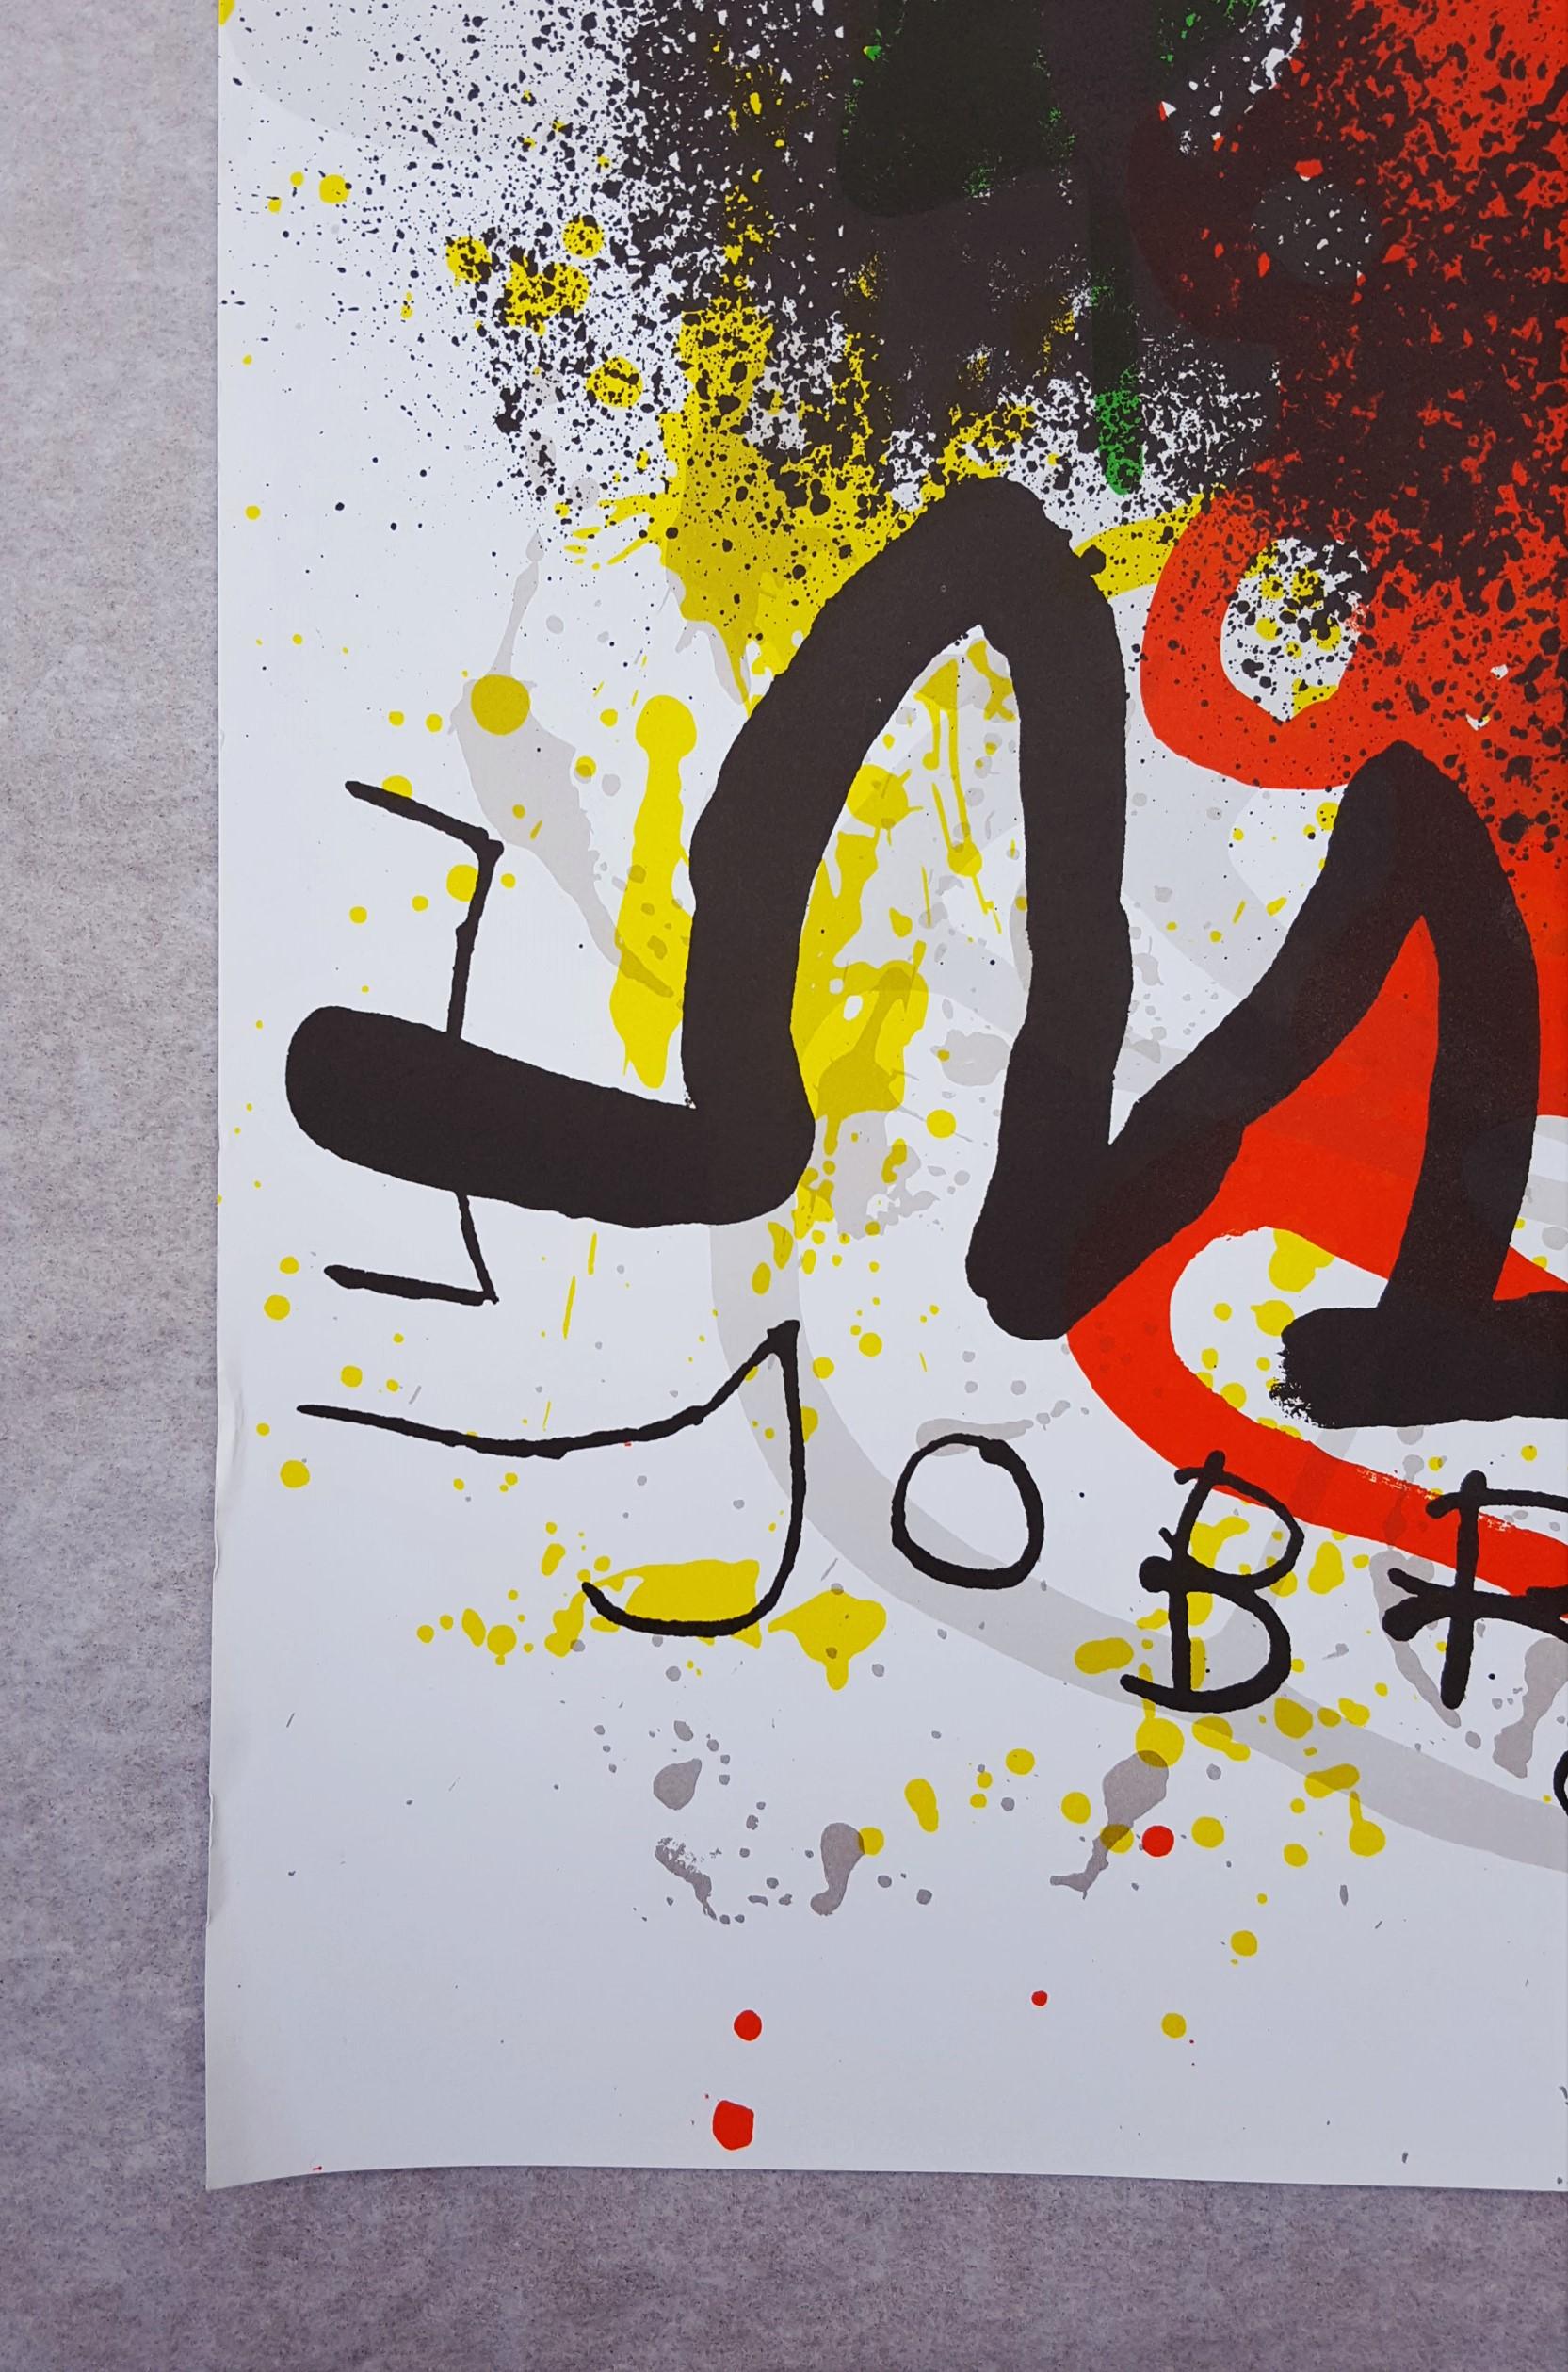 Sobreteixims – Print von Joan Miró